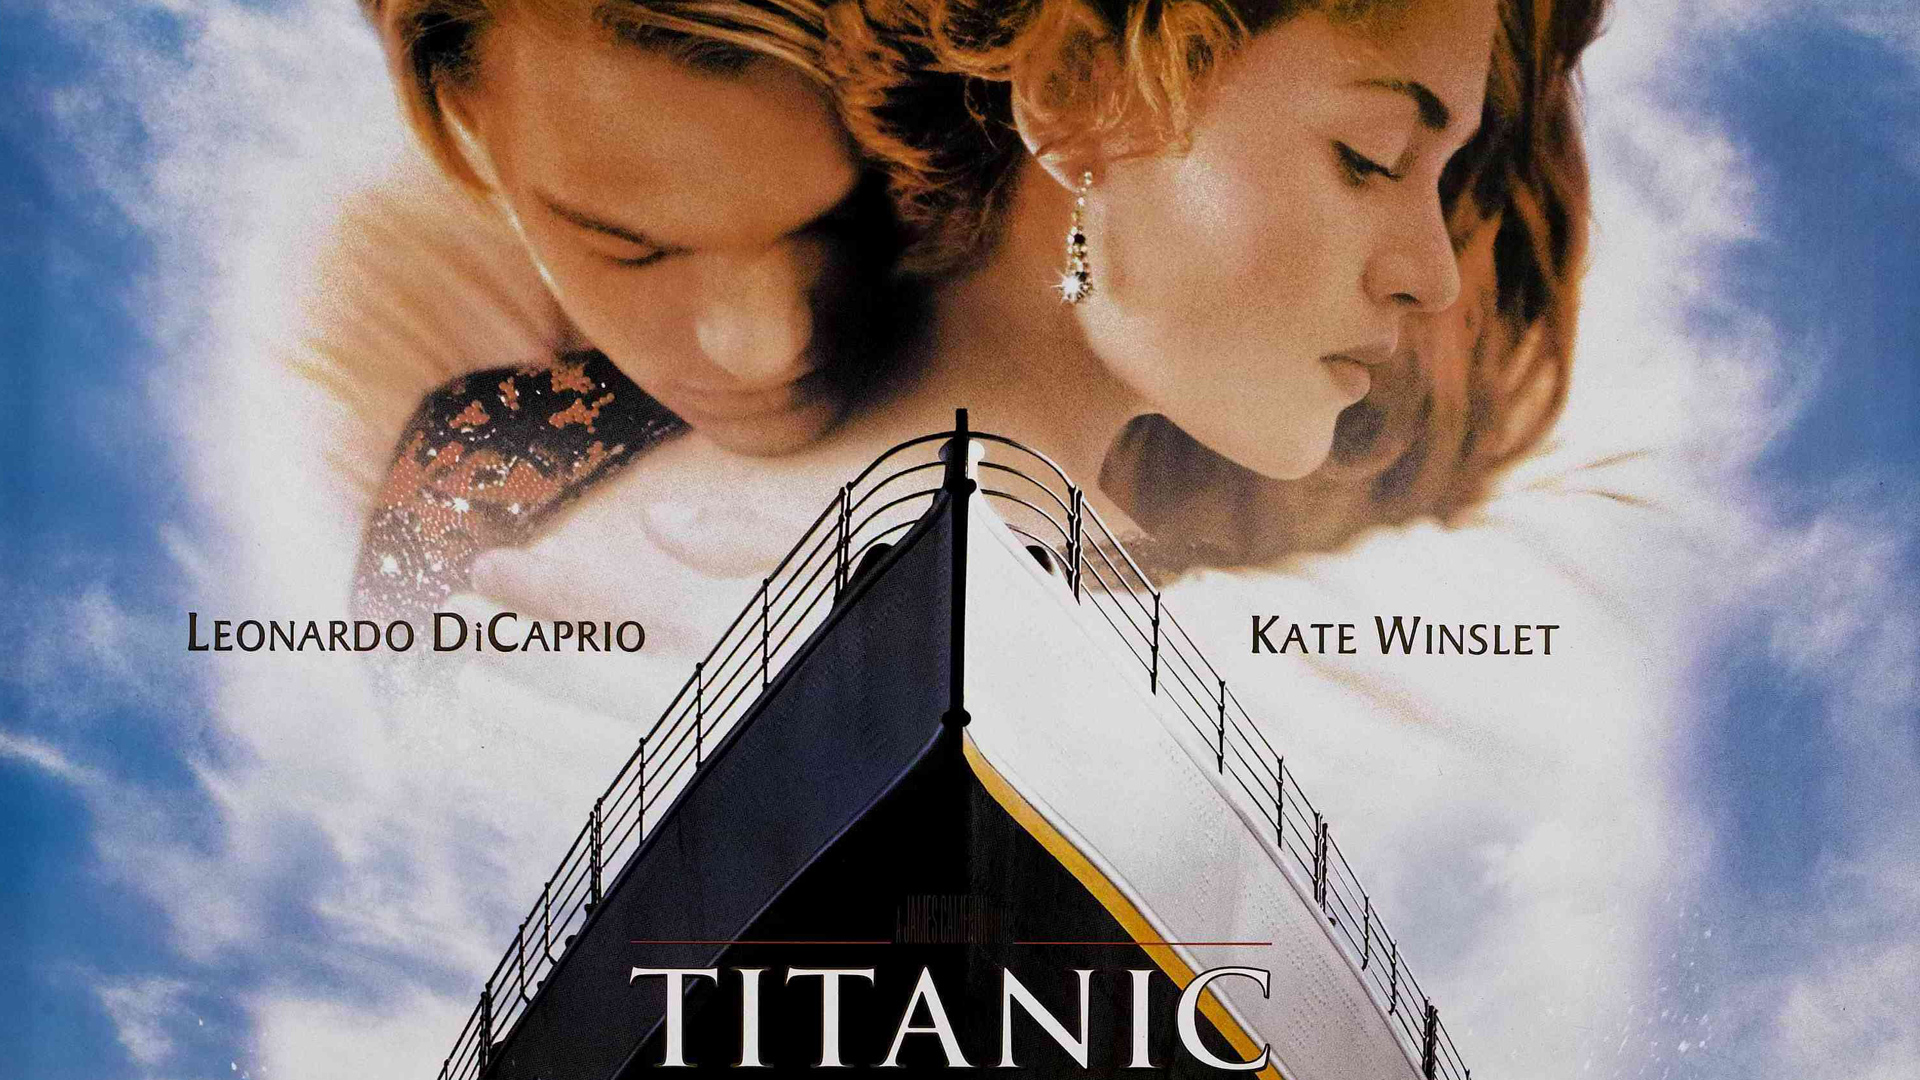 The Titanic Movie